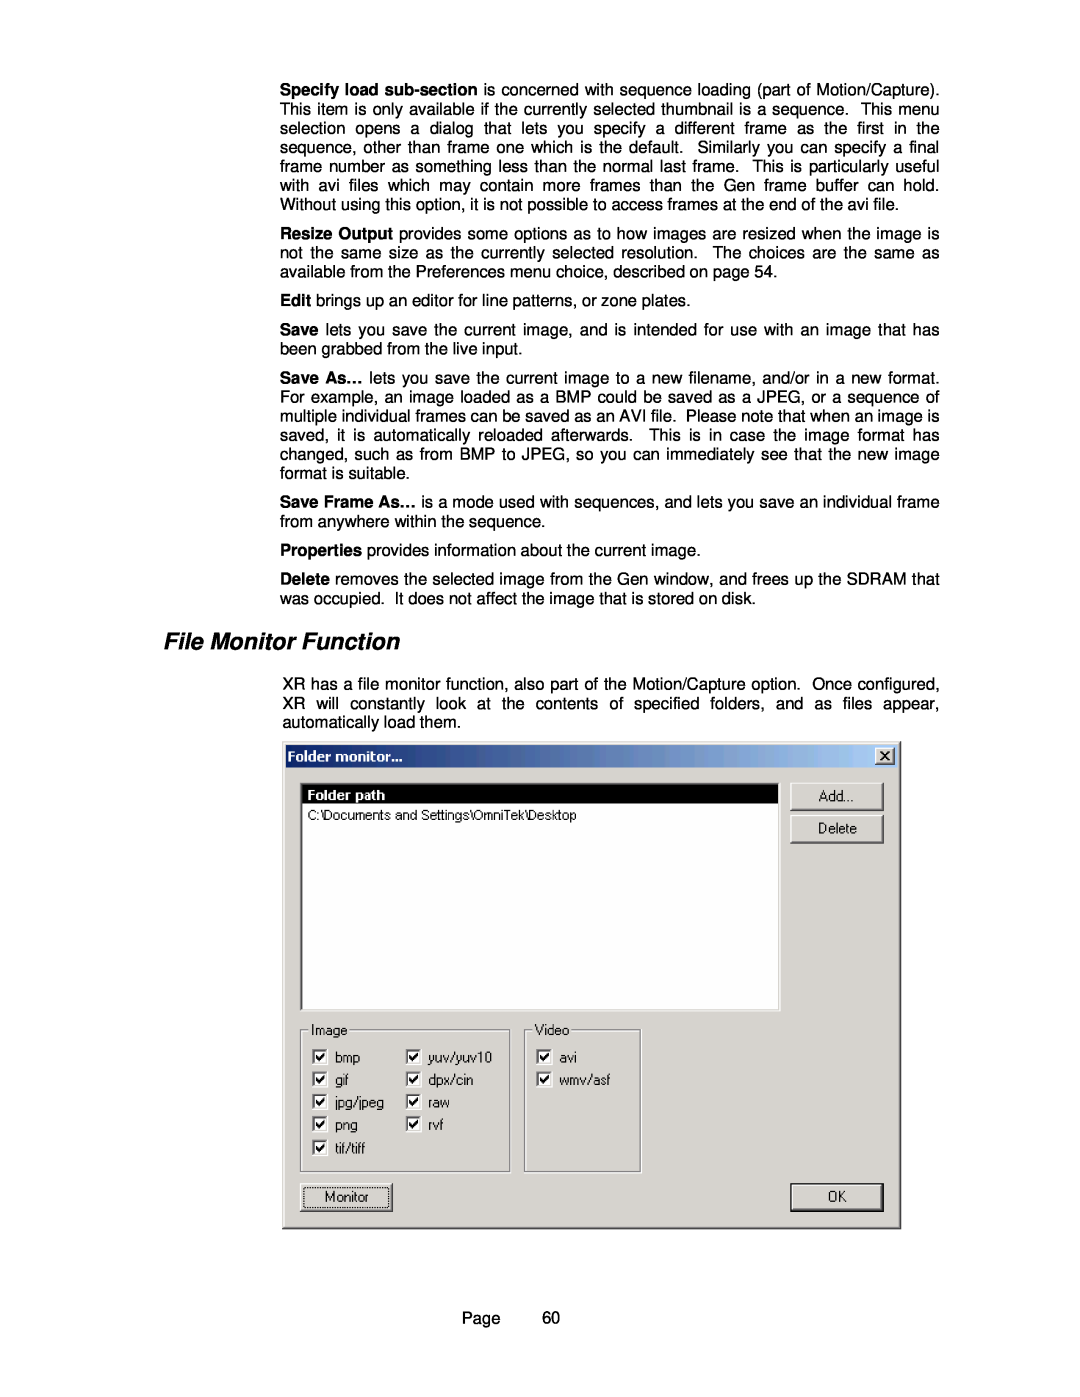 OmniTek OmniTek XR manual File Monitor Function 